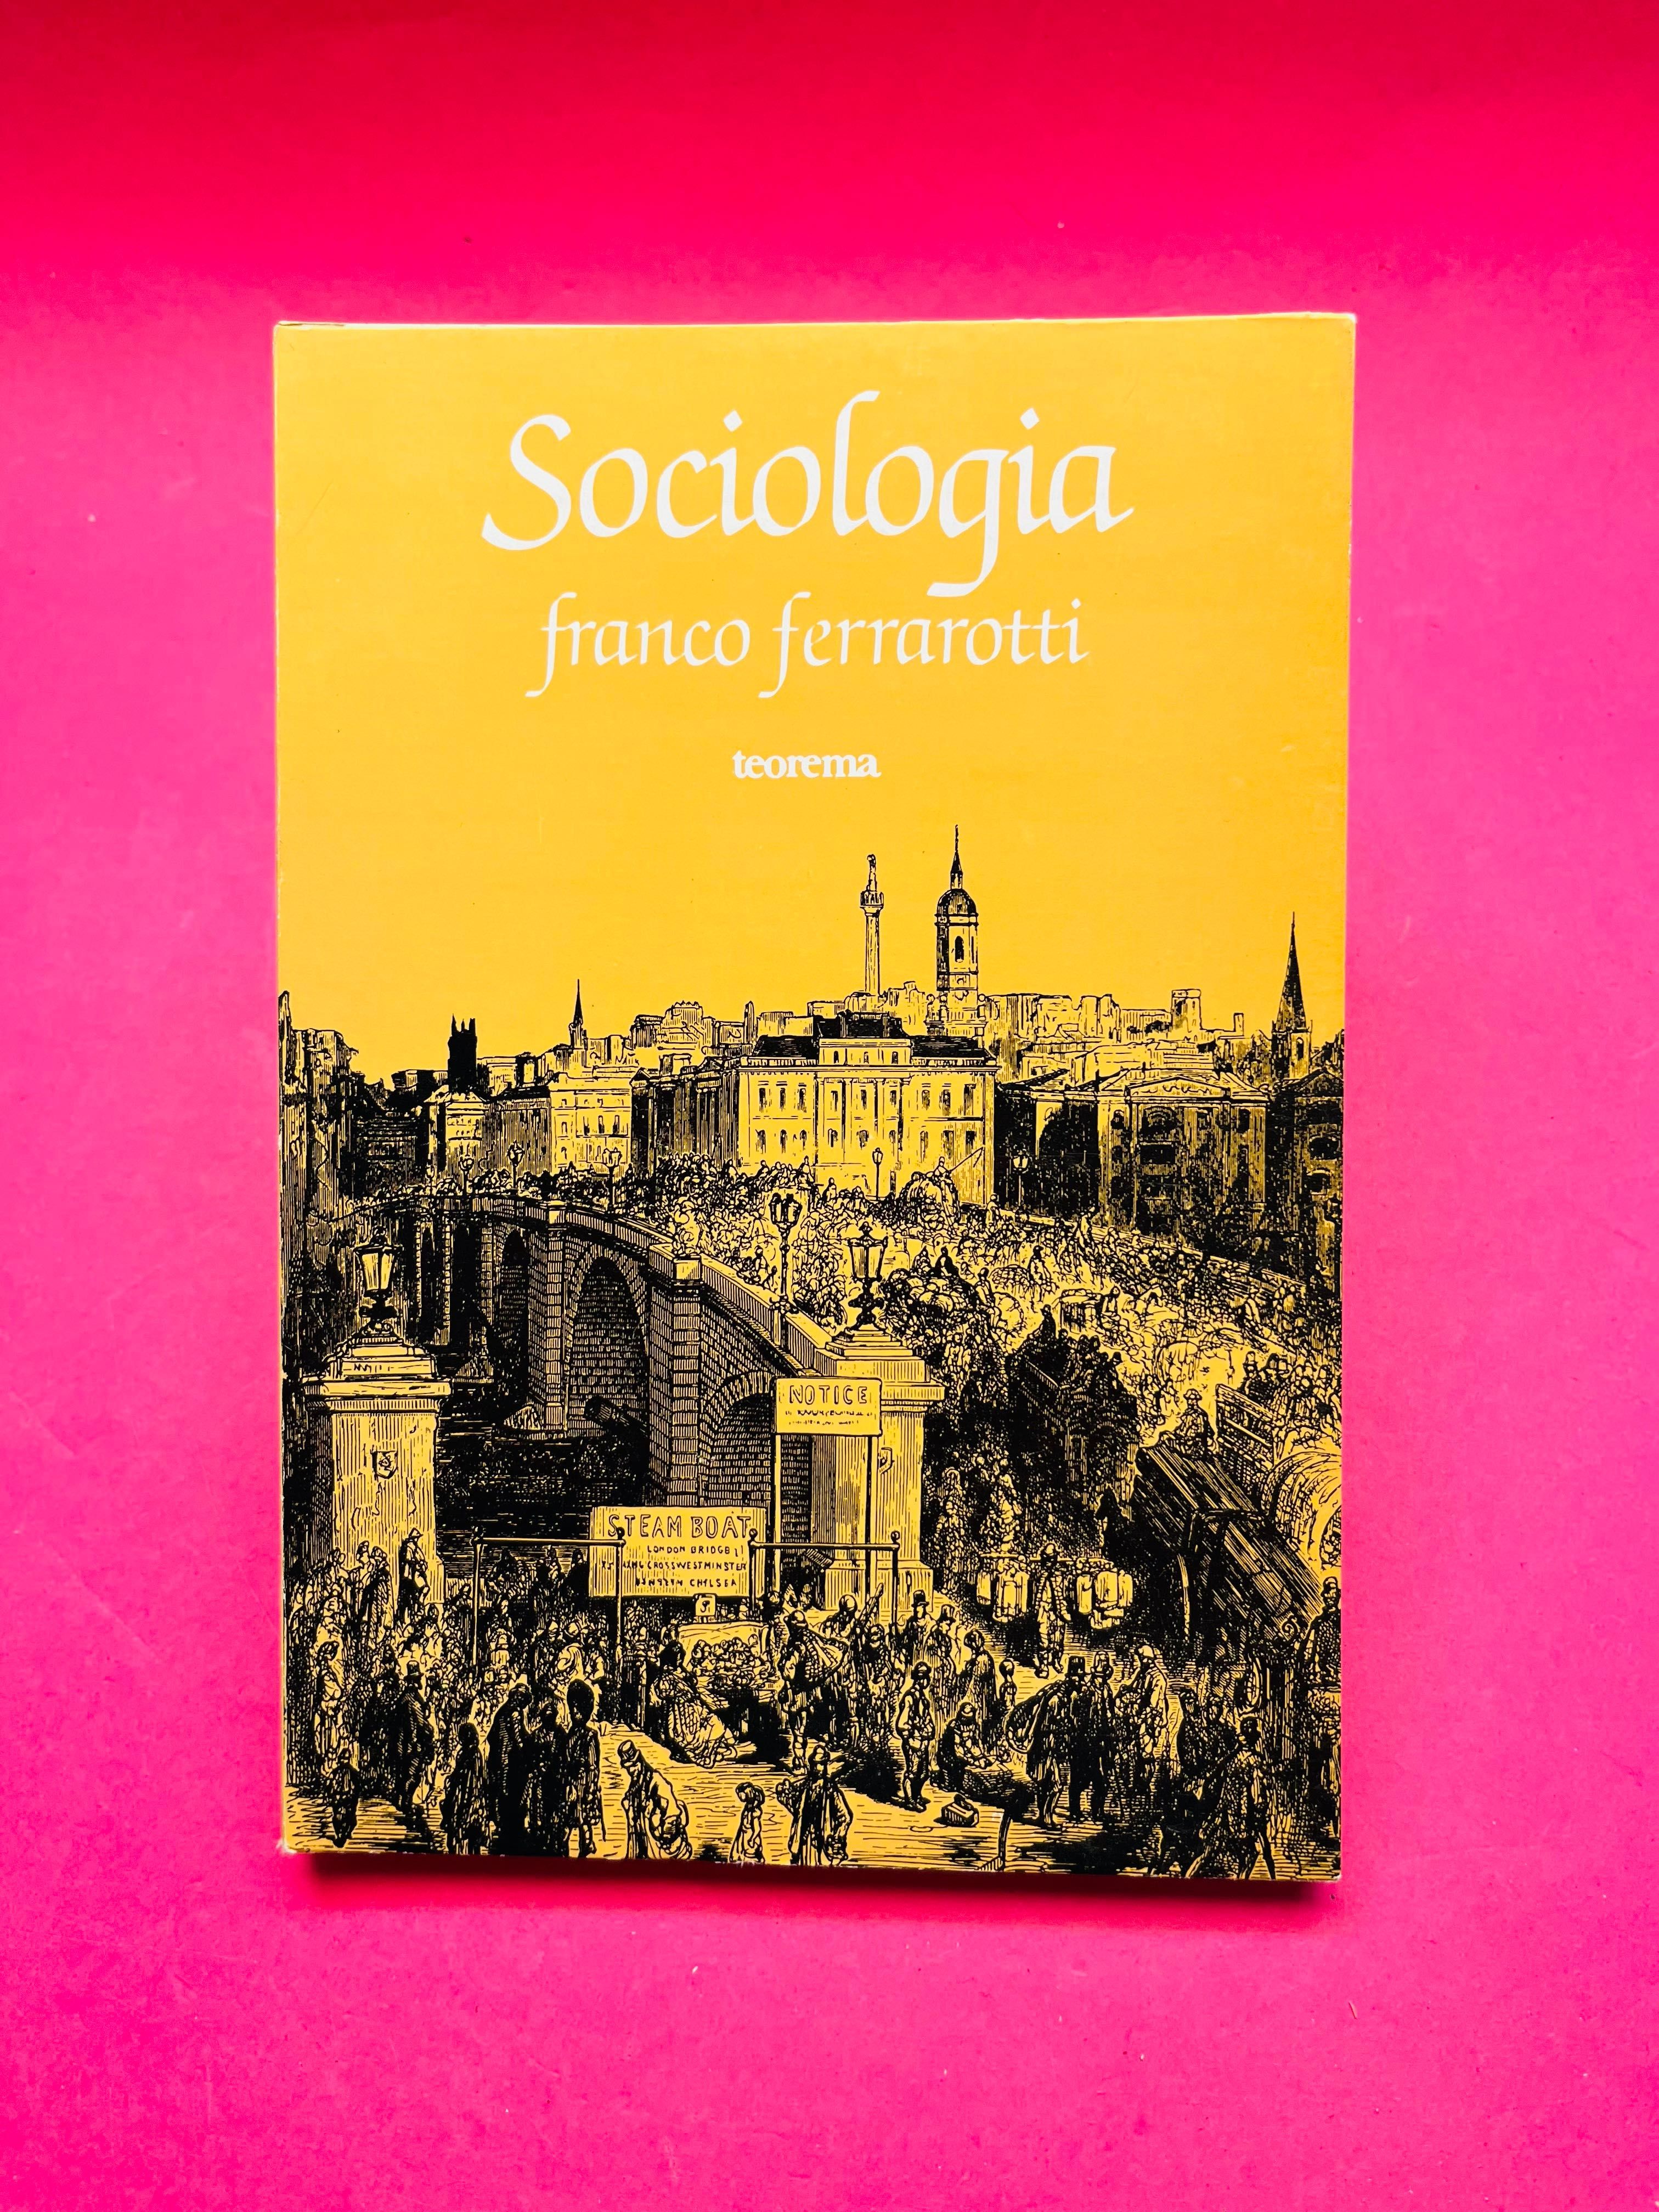 Sociologia - Franco Ferrarotti